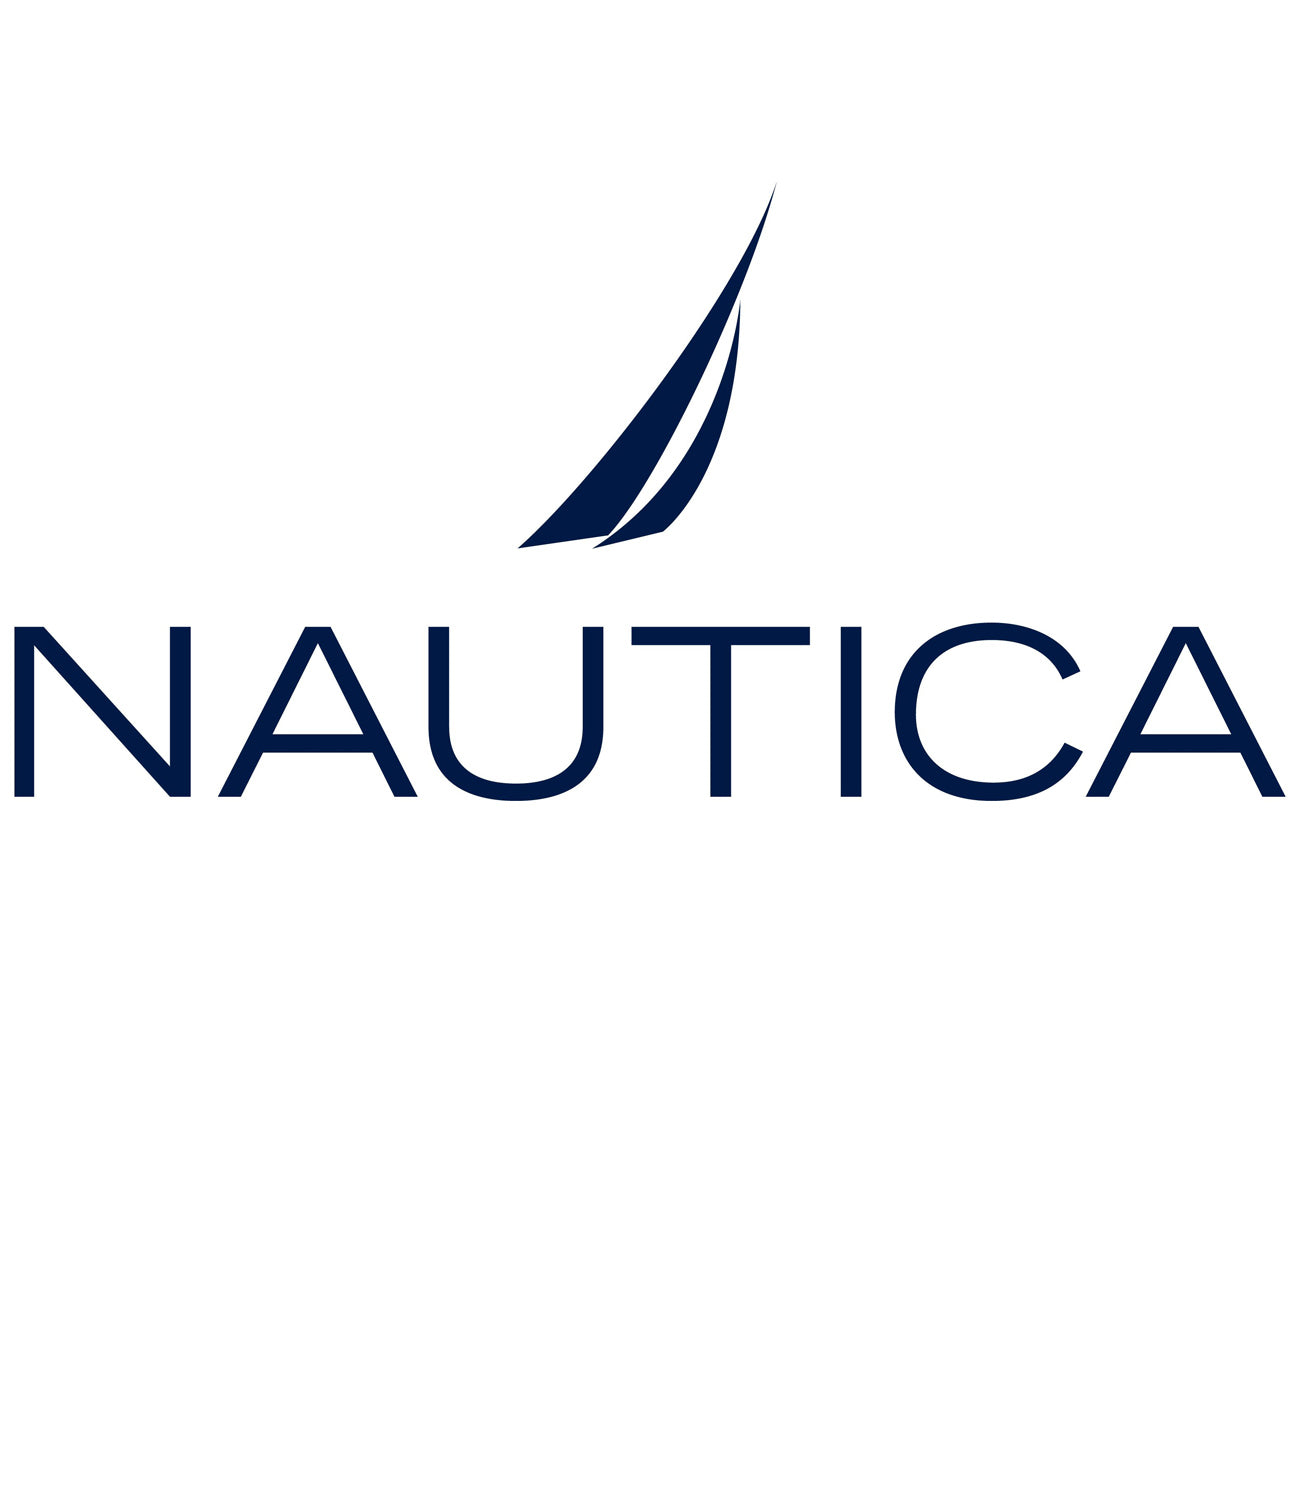 Nautica Boys 8-20 Flag Logo T-Shirt